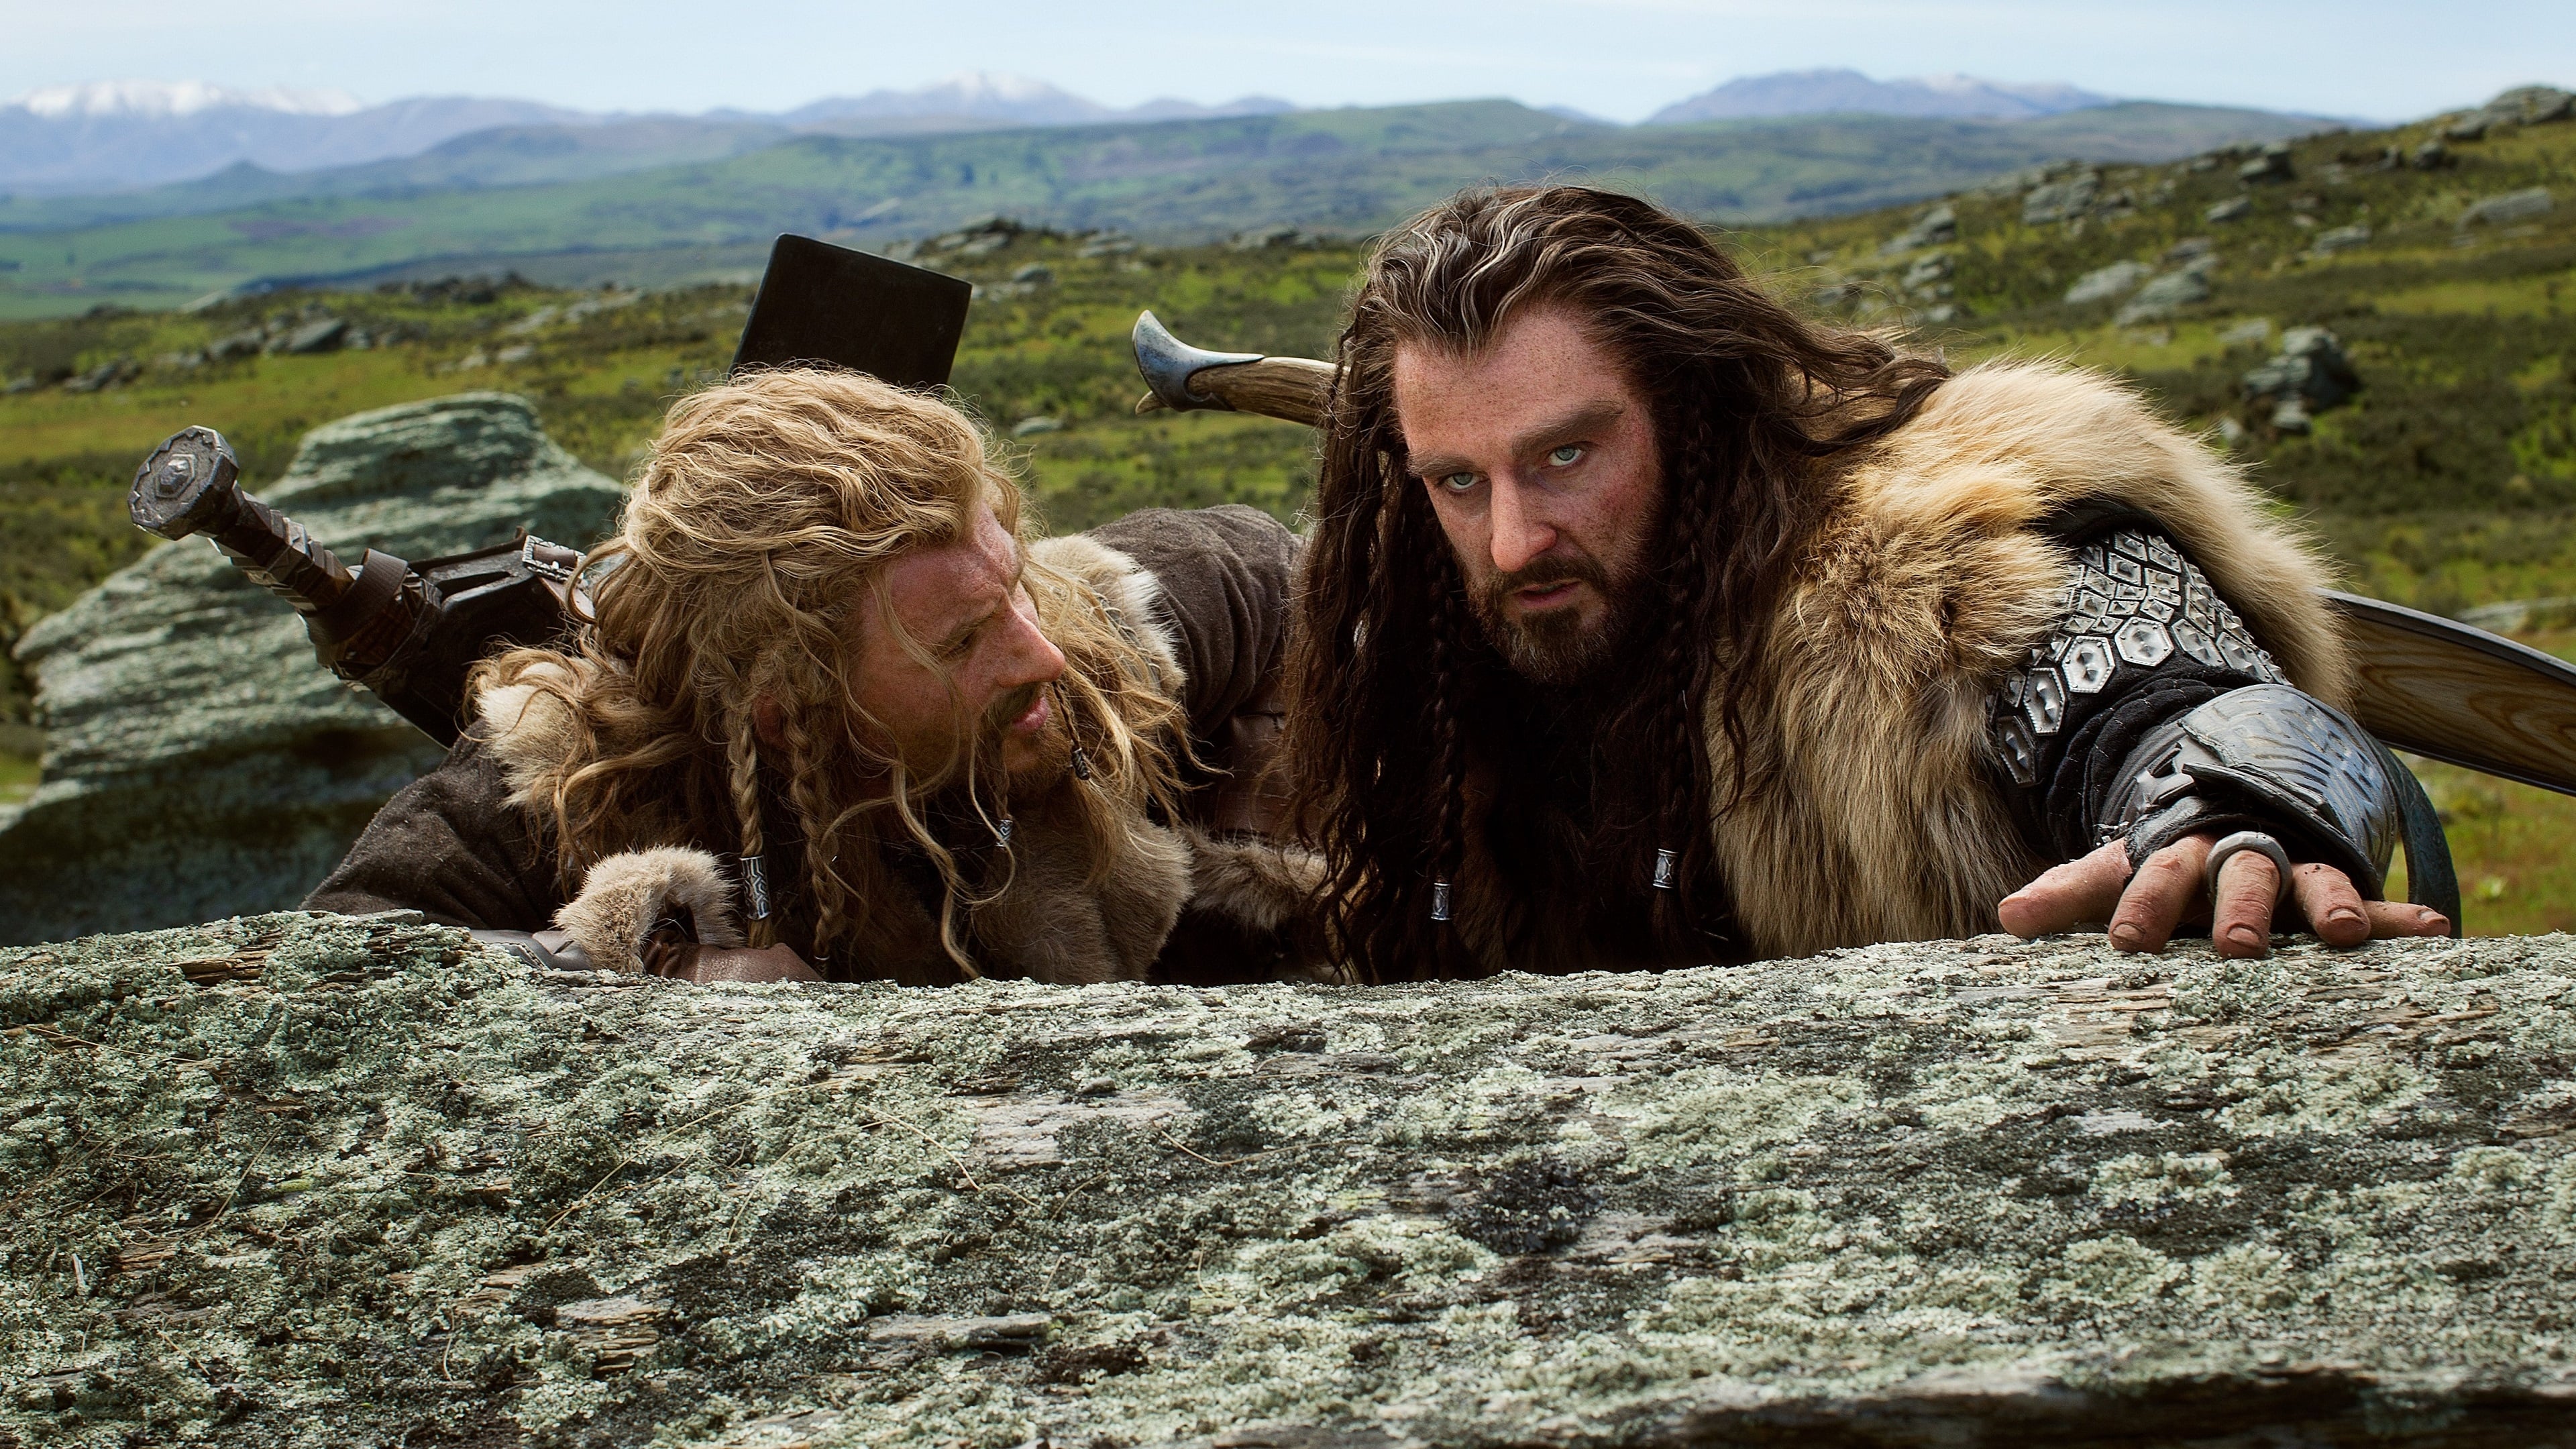 Image du film Le Hobbit : un voyage inattendu 6emevphjlllw8s7wfv6ja5ufzdljpg